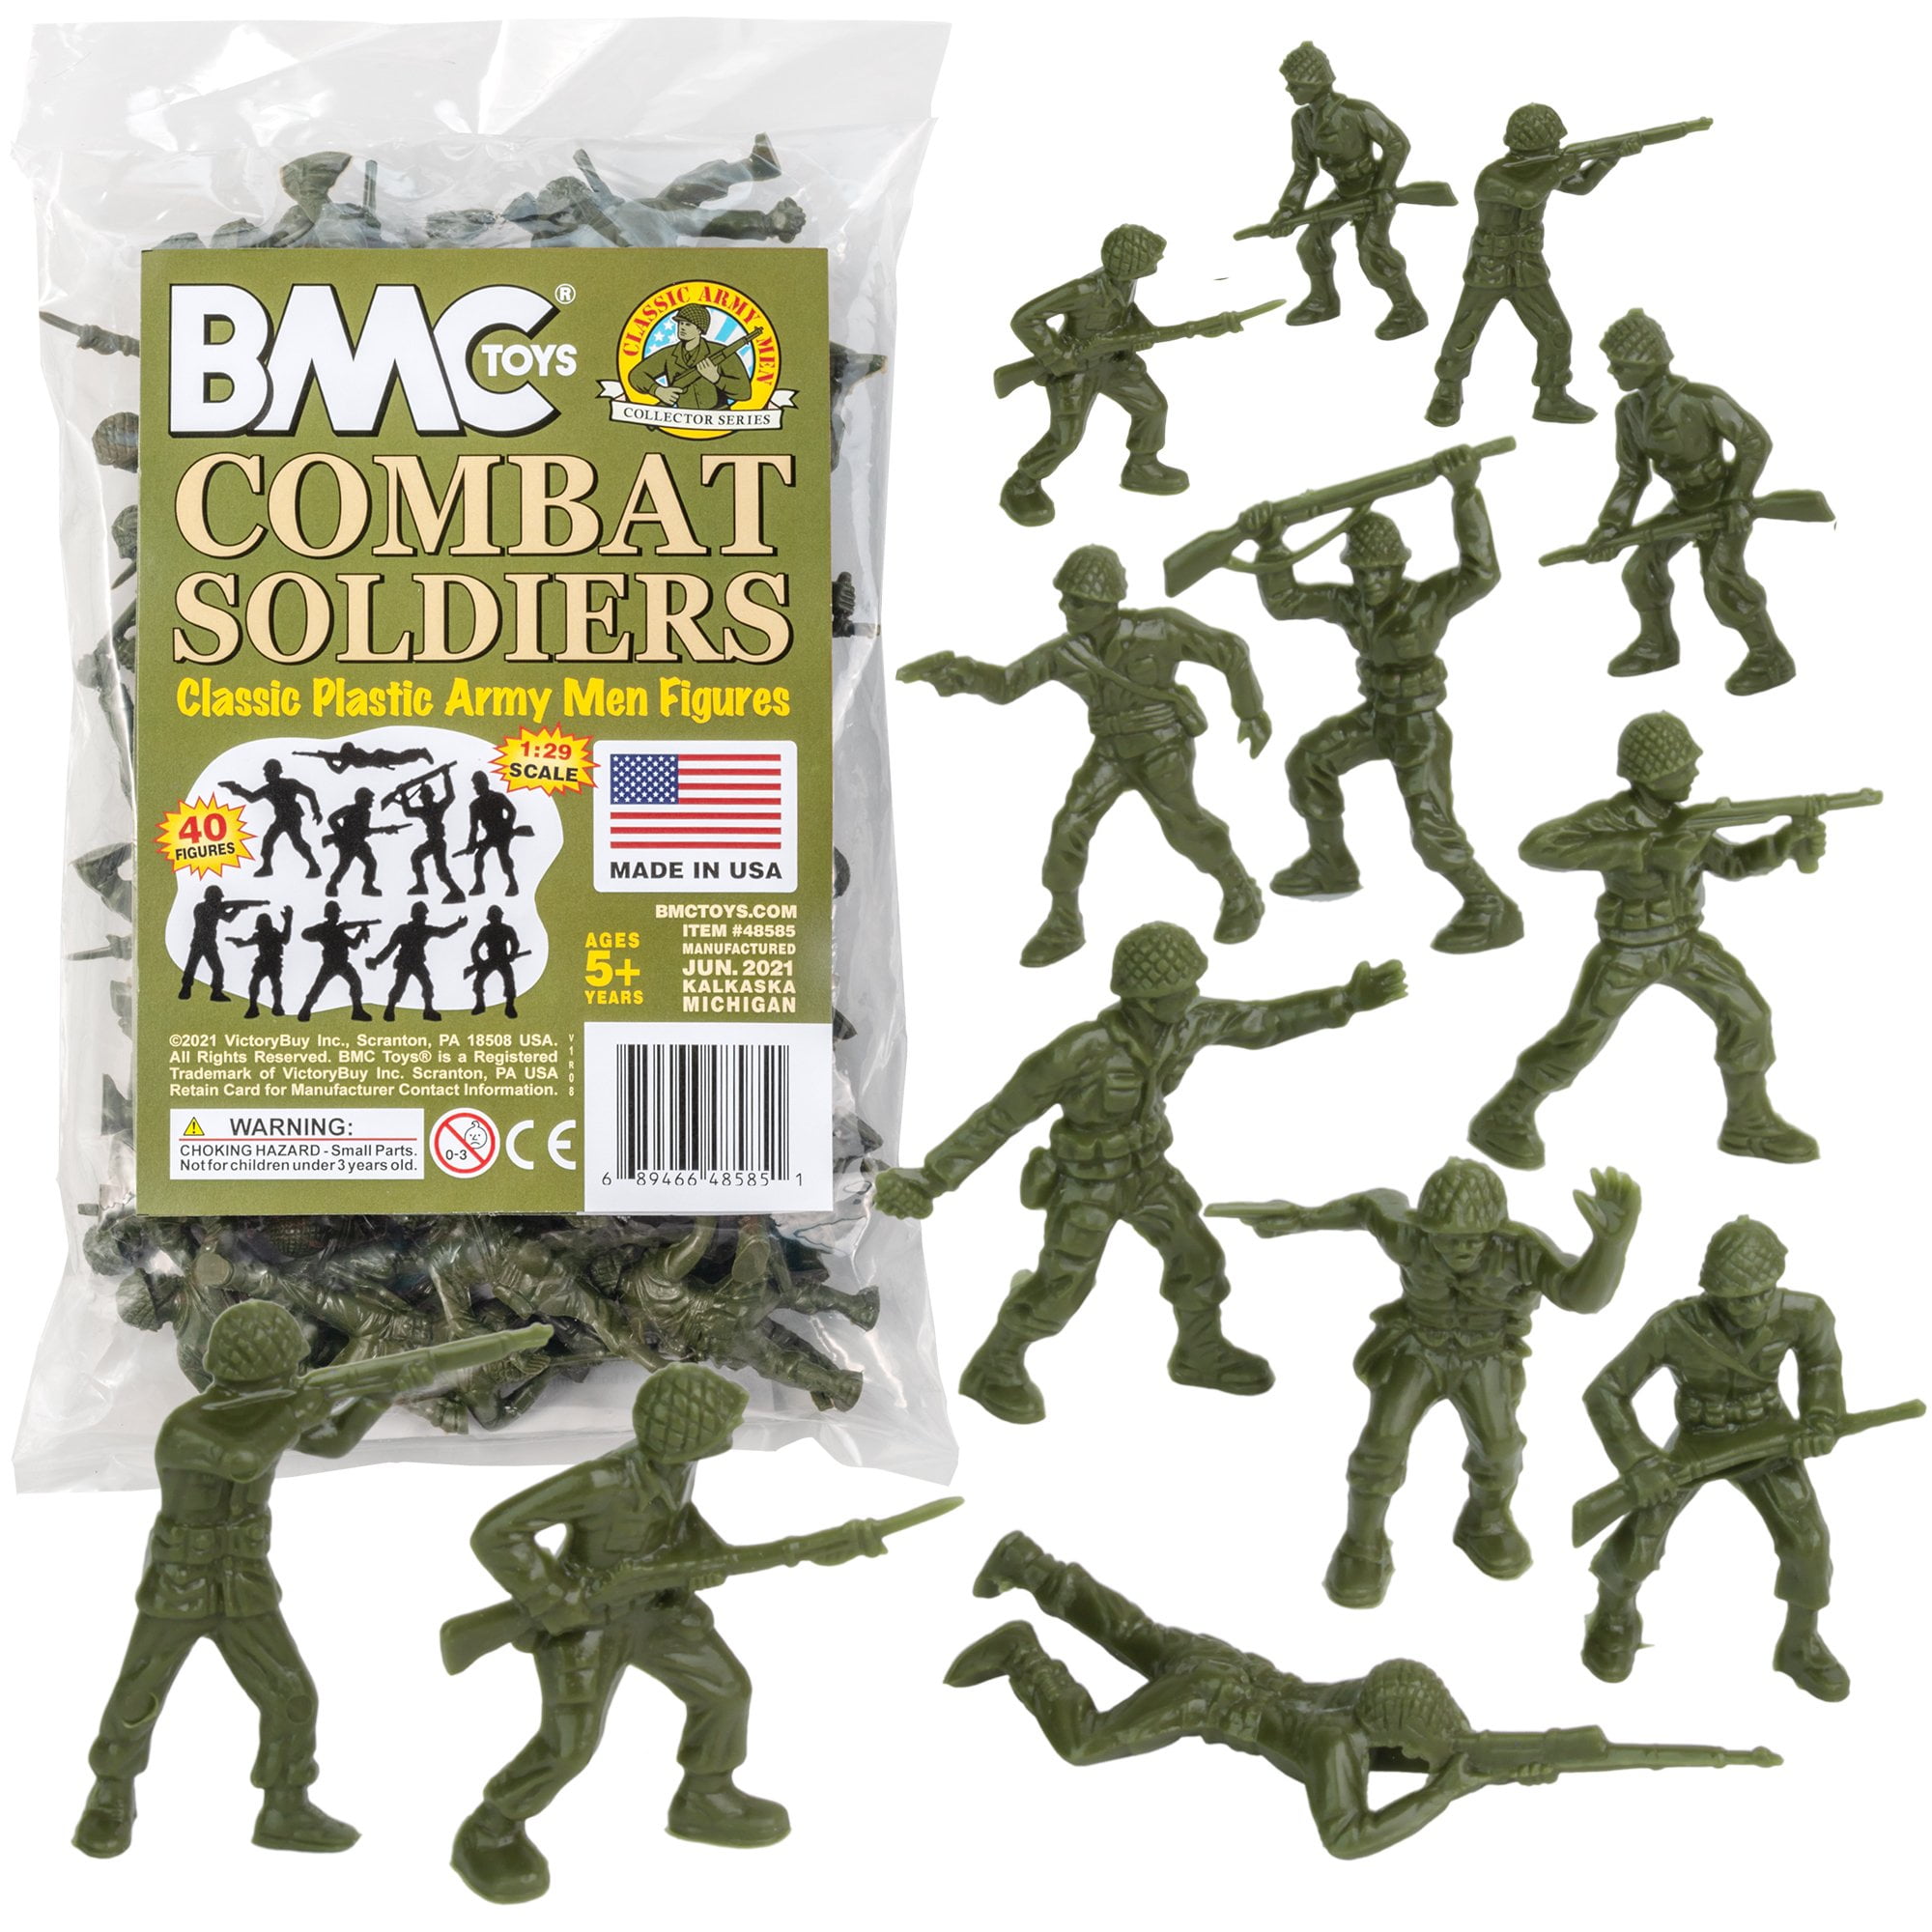 100 pcs Military Playset Plastic Toy Soldiers Men 3.8cm Figures 